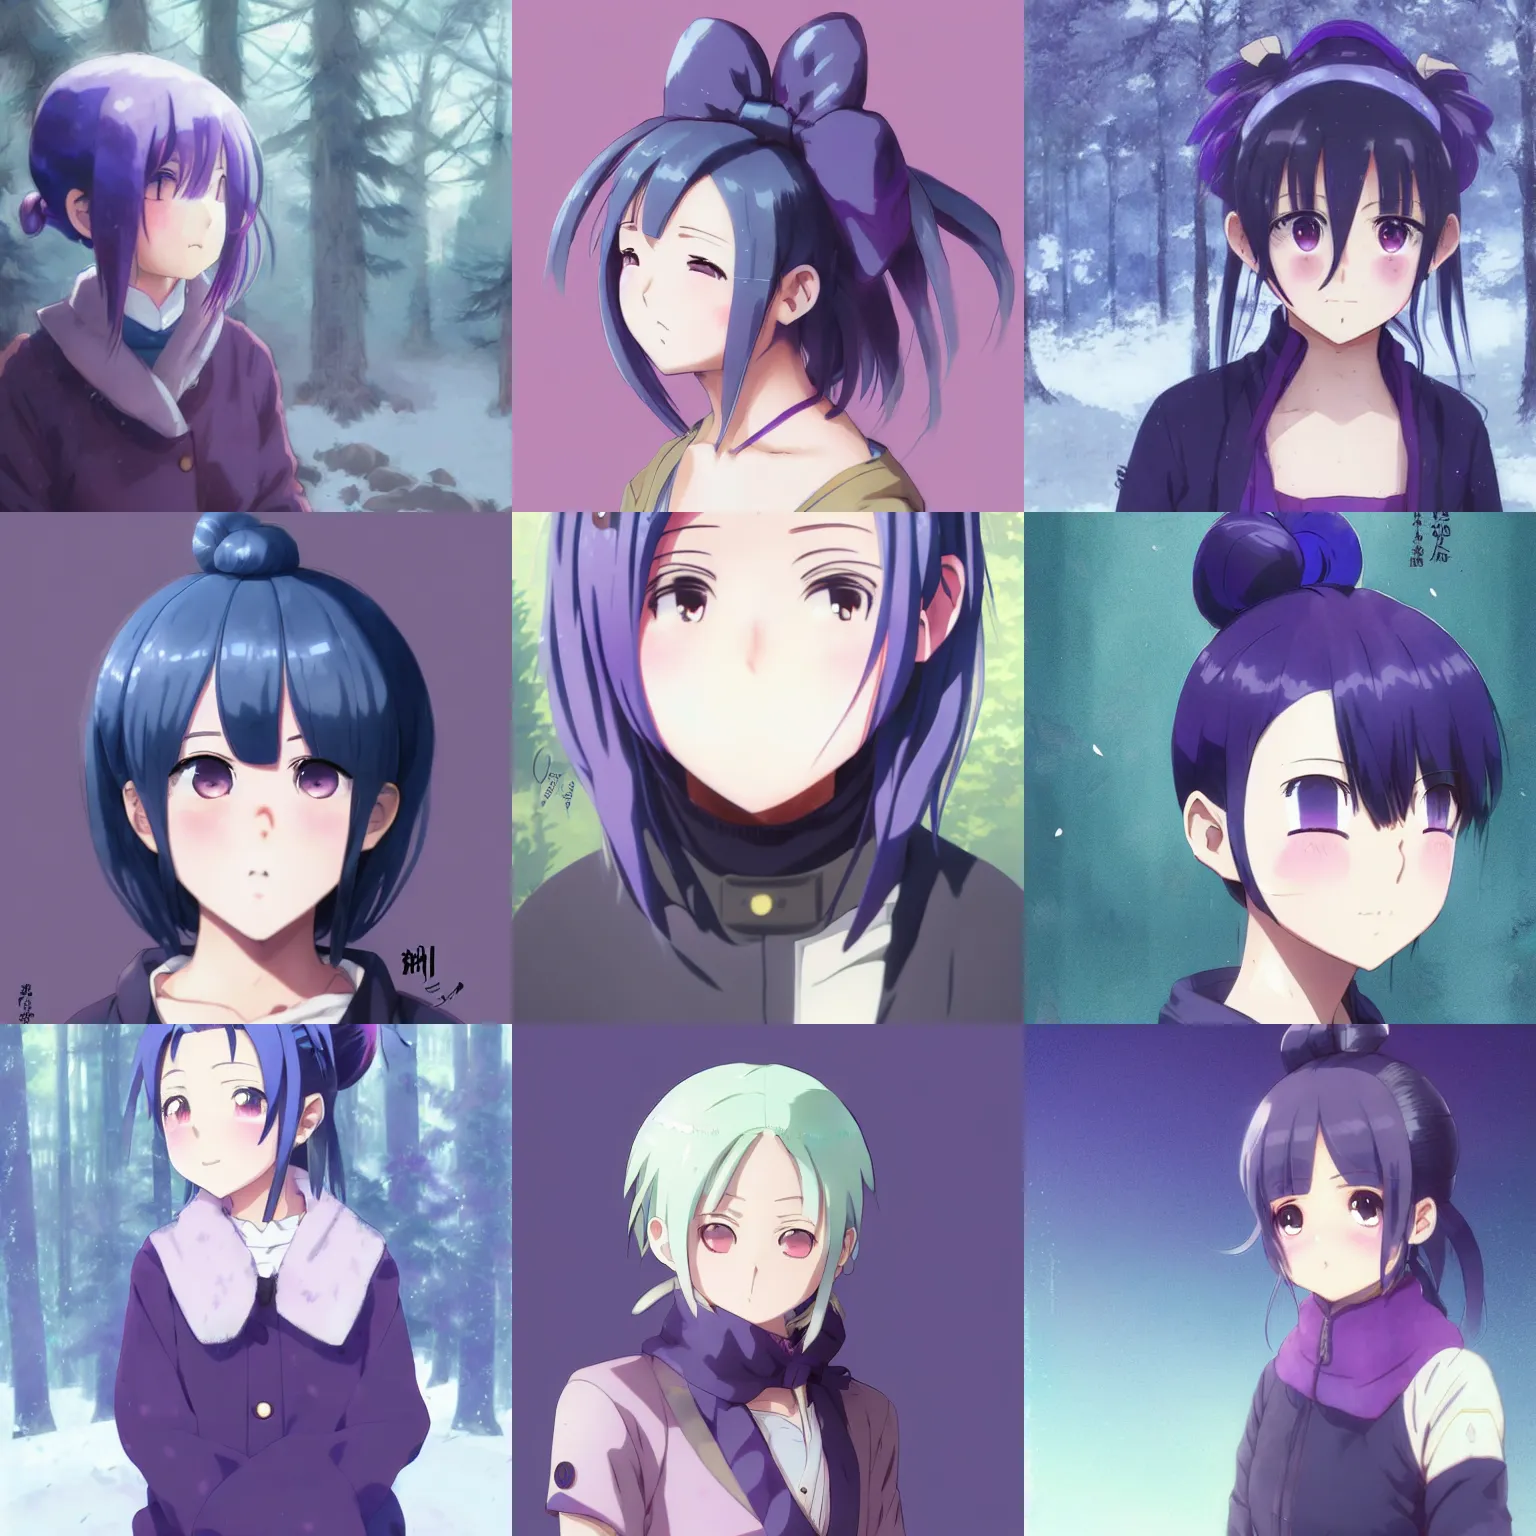 Prompt: cute anime shima rin shimarin yuru camp dark - blue hair bun tied in a high bun purple violet eyes portrait by greg rutkowski forest background